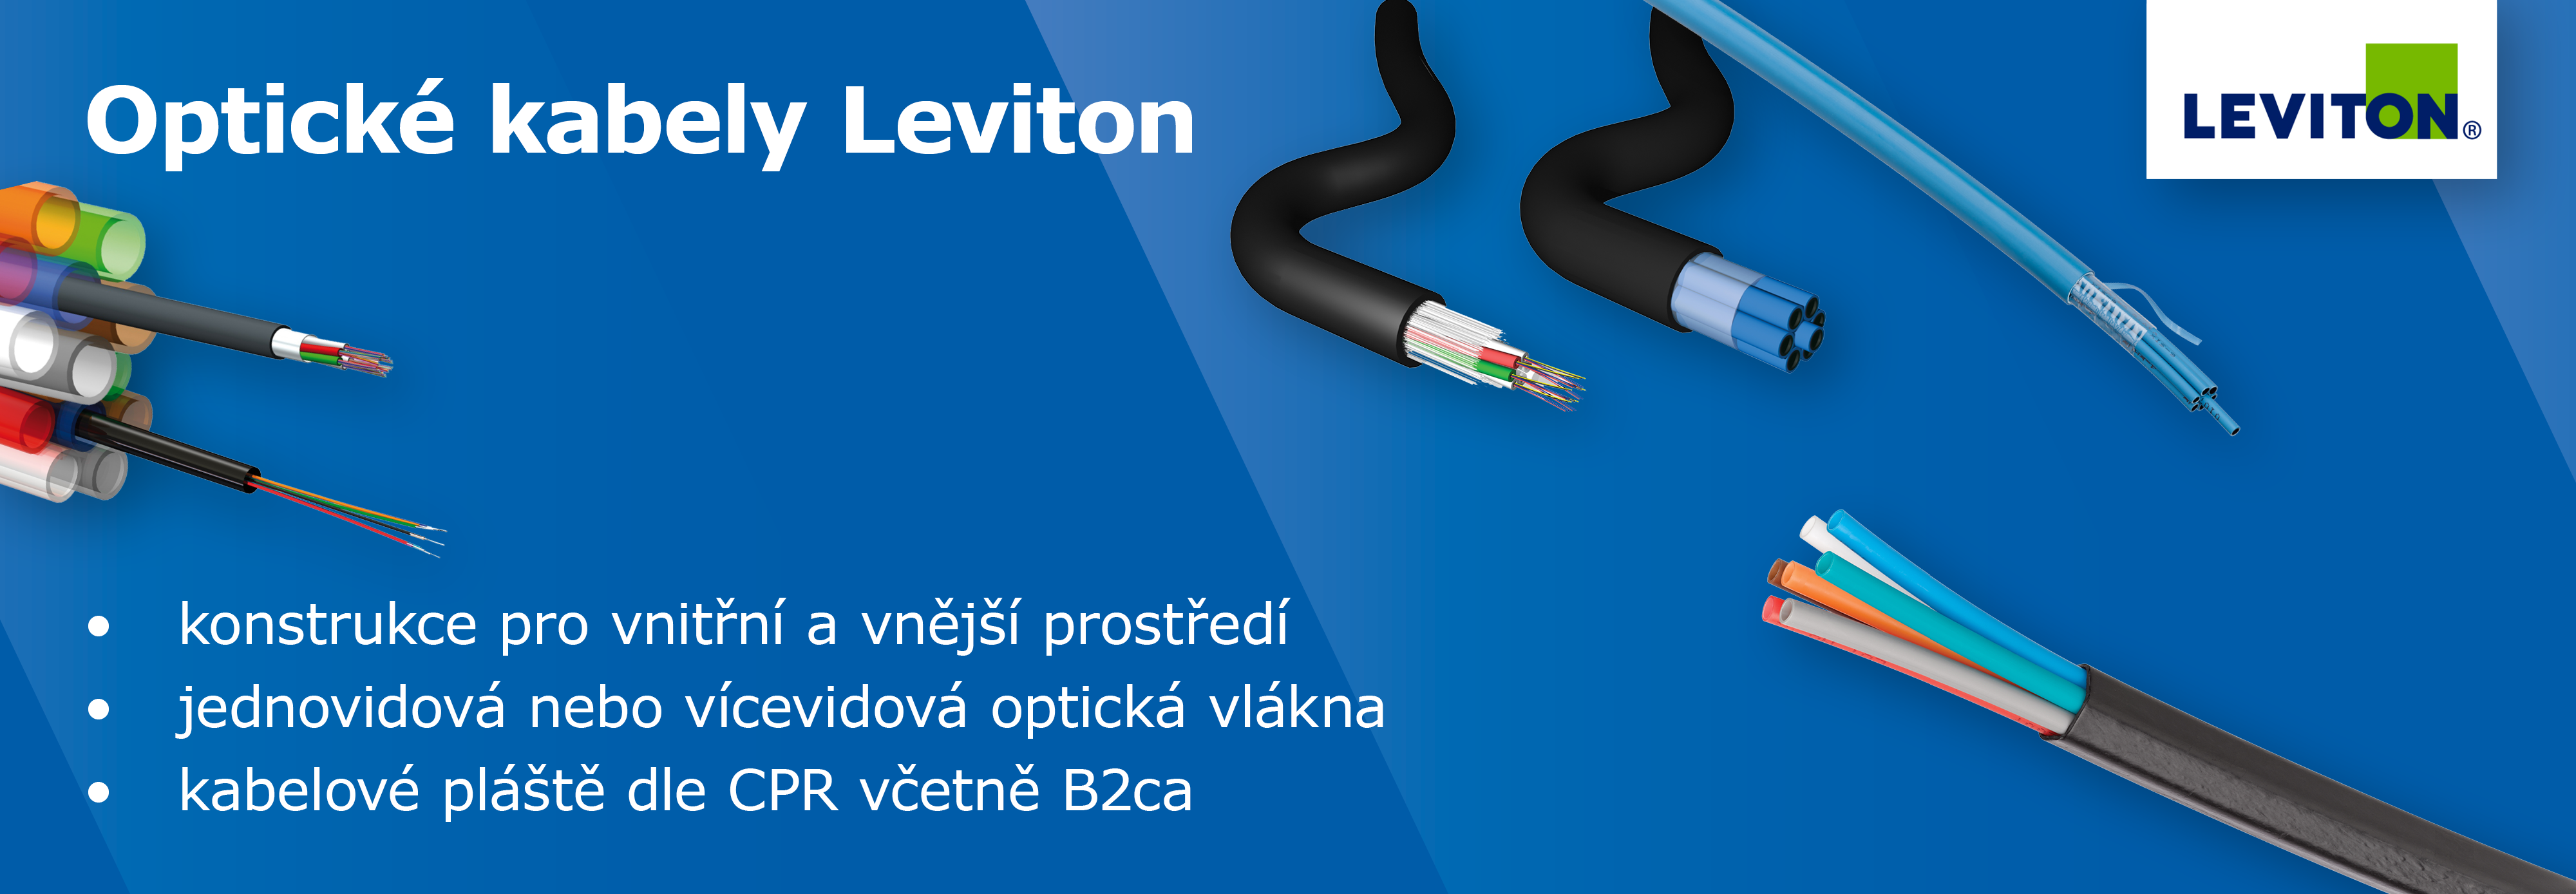 Leviton optické kabely